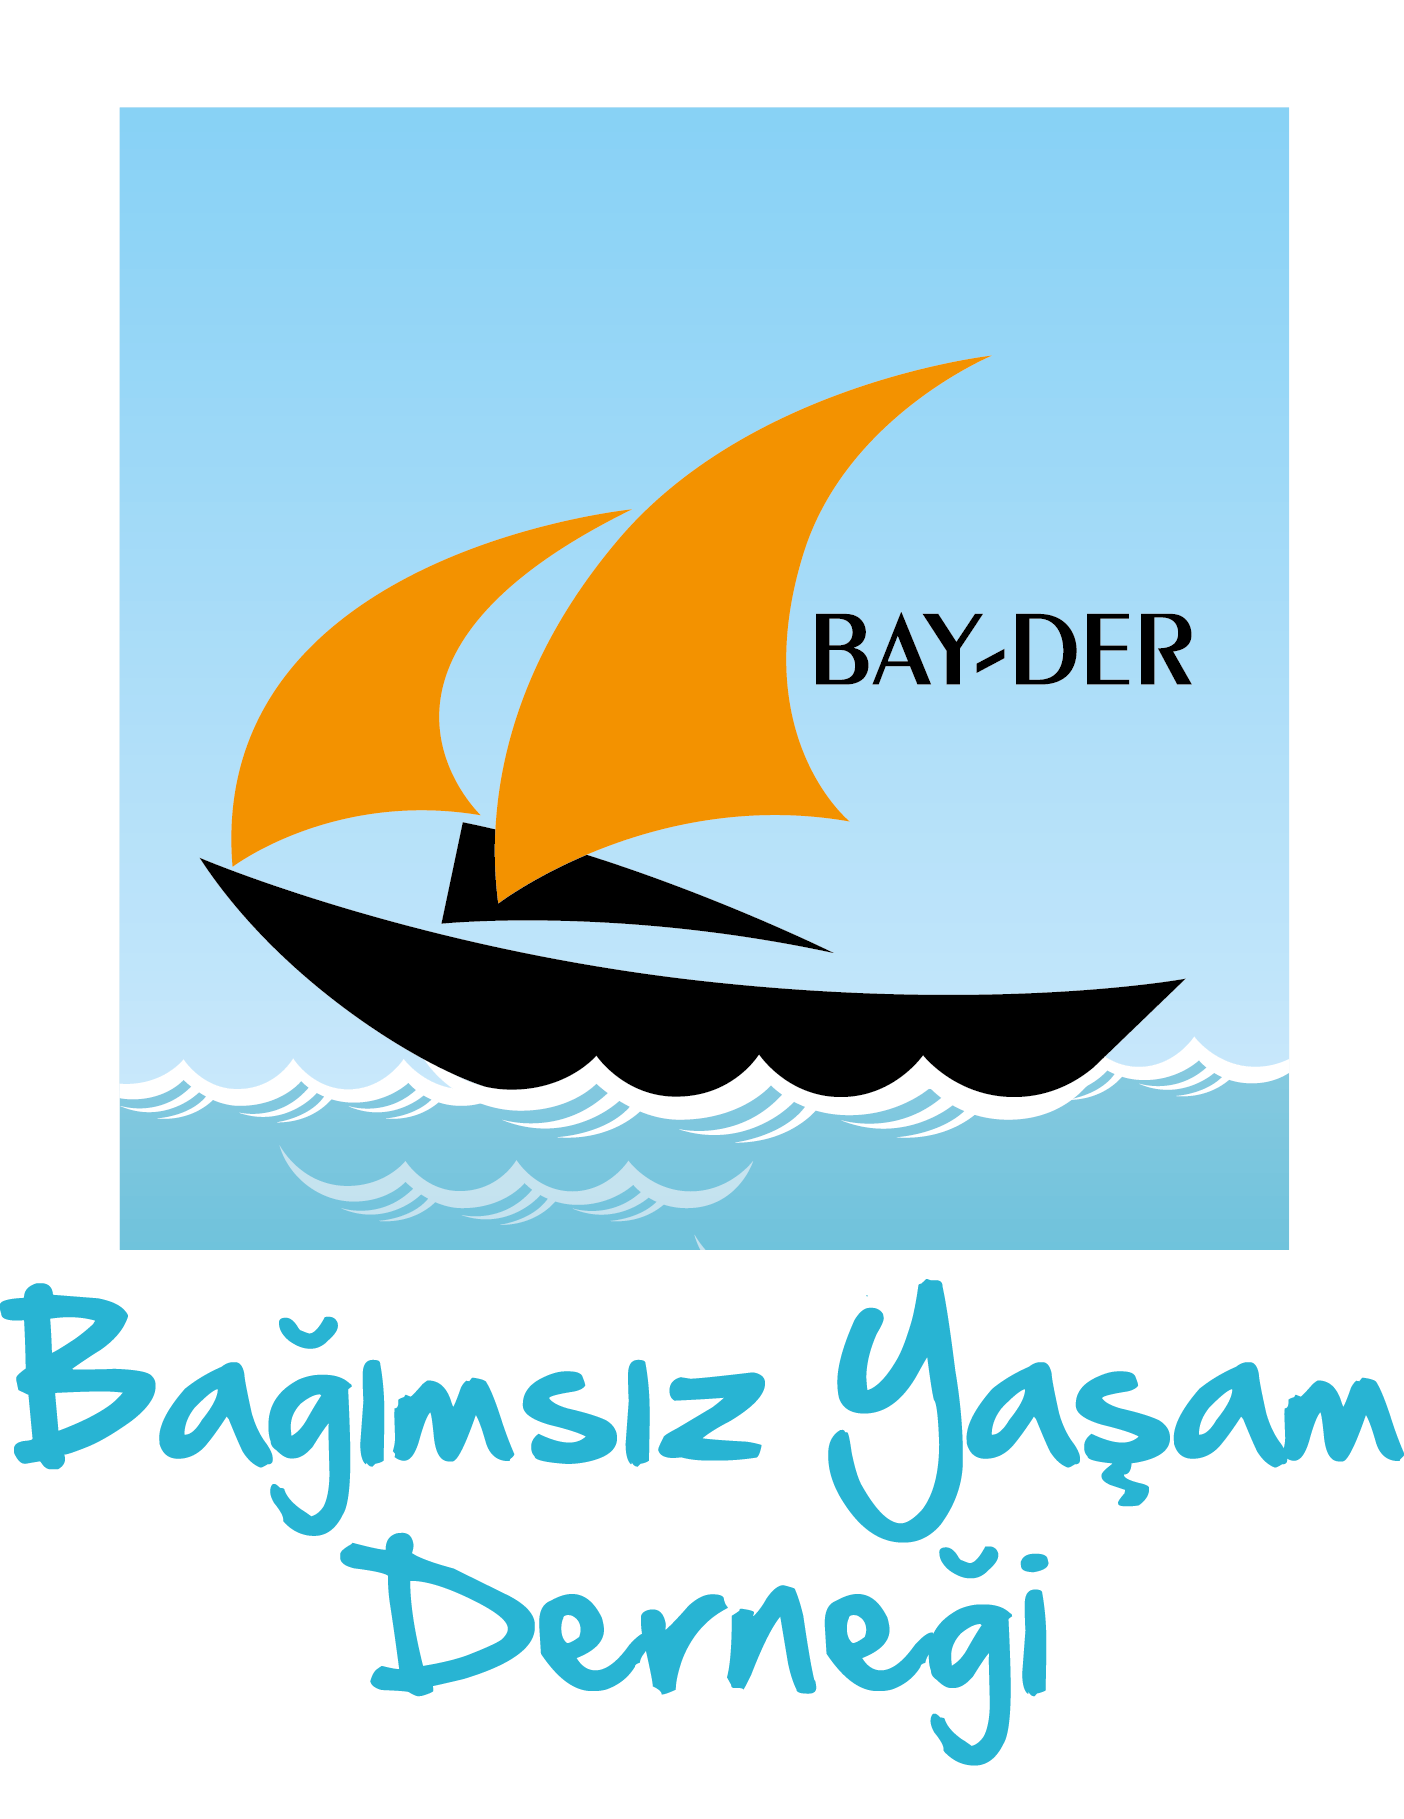 Bayder